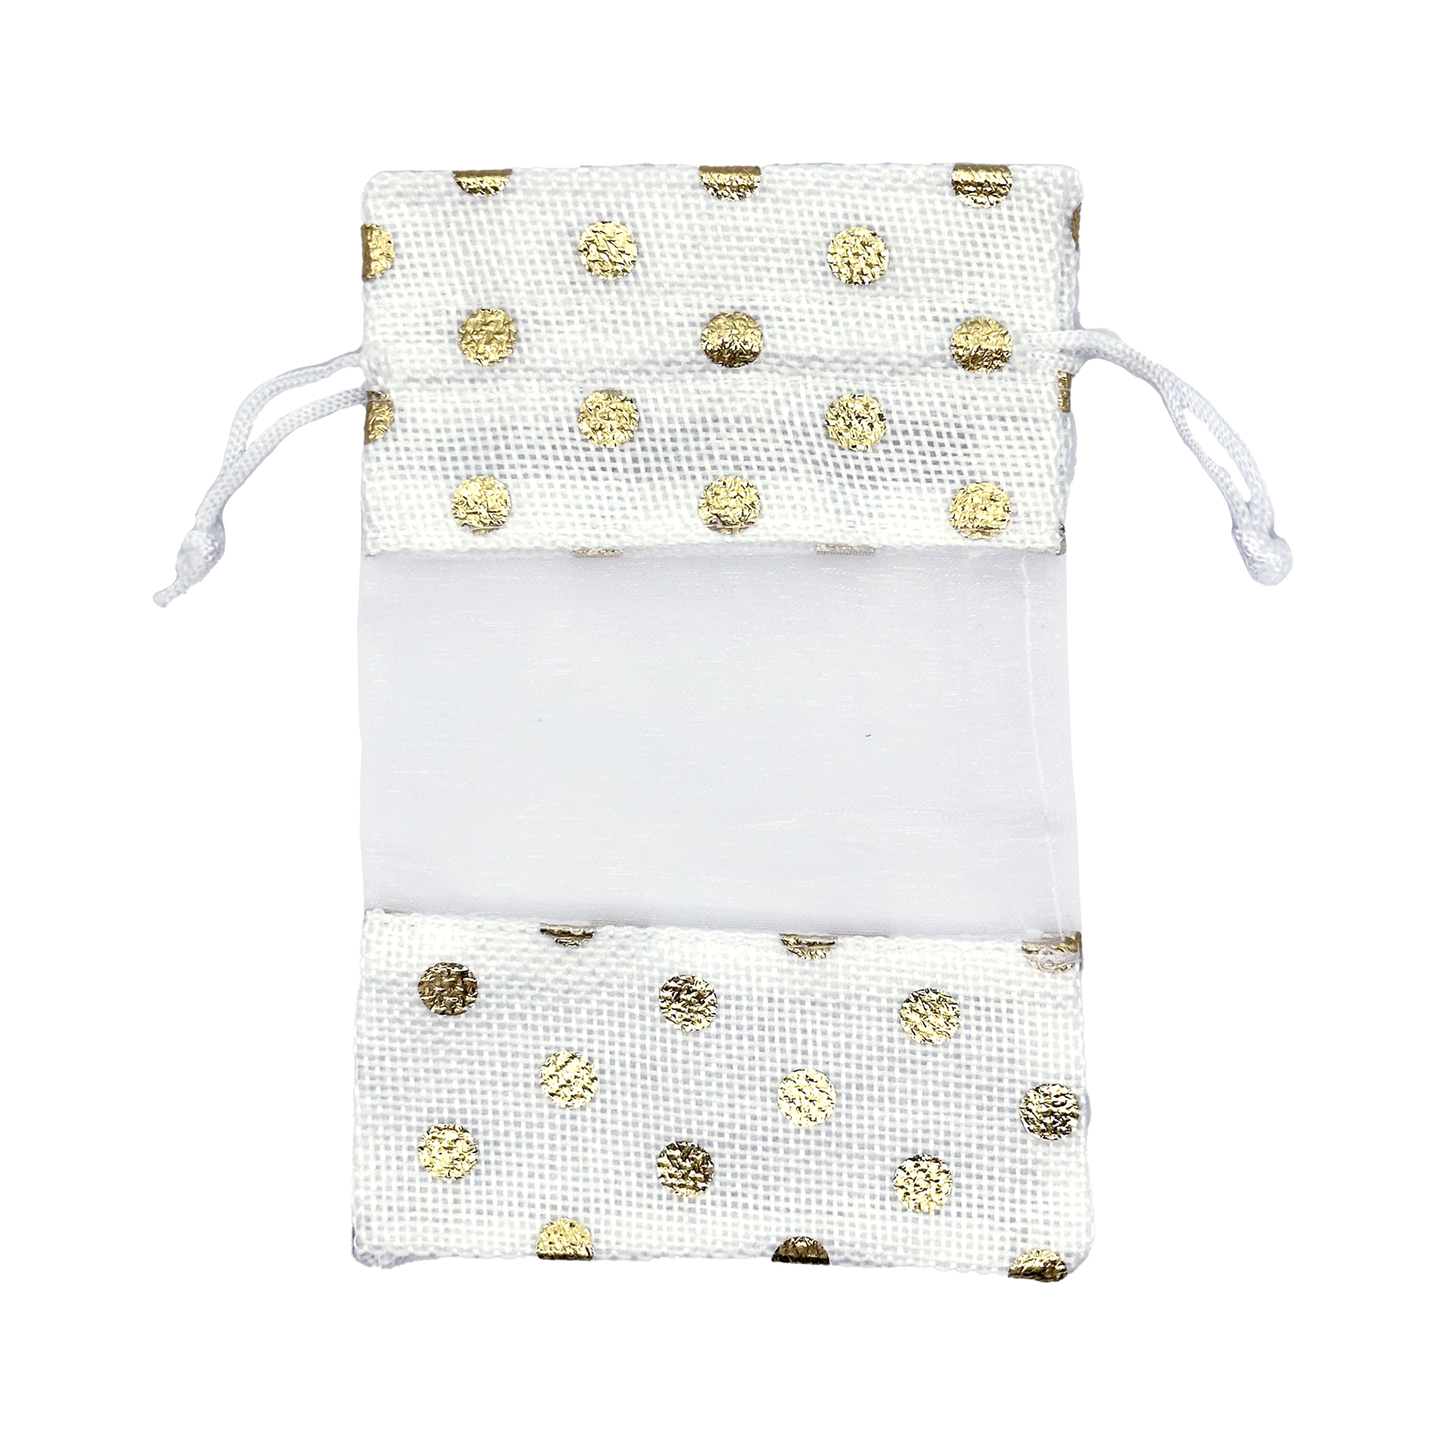 3 1/2" x 5 1/2" White with Gold Polka Dot Linen Burlap and Sheer Organza Gift Bag